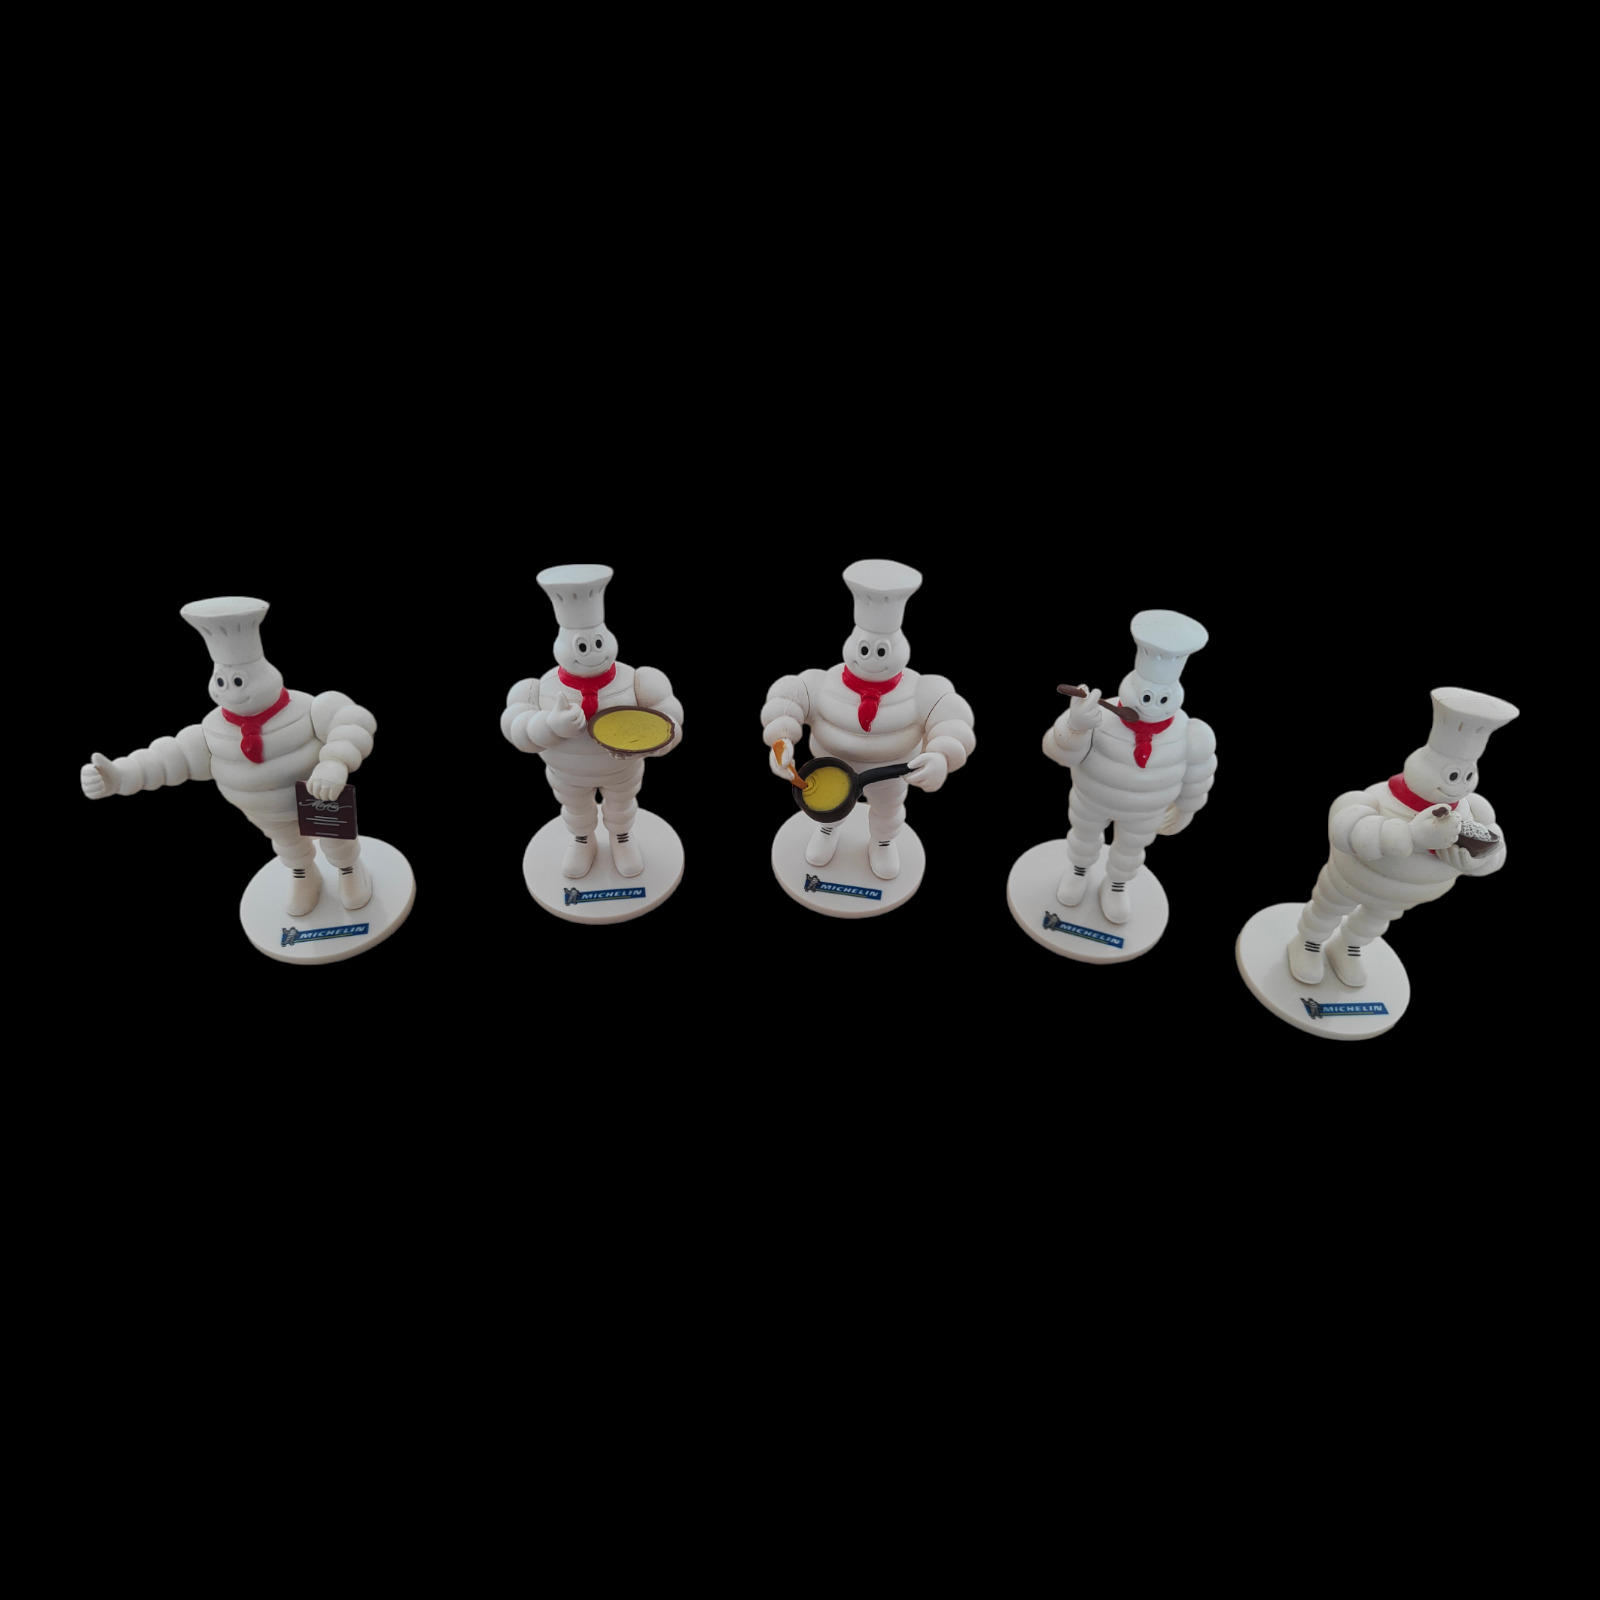 Michelin Bibendum Chef Mascot Figurine Official Merchandise Collectible Set of 5